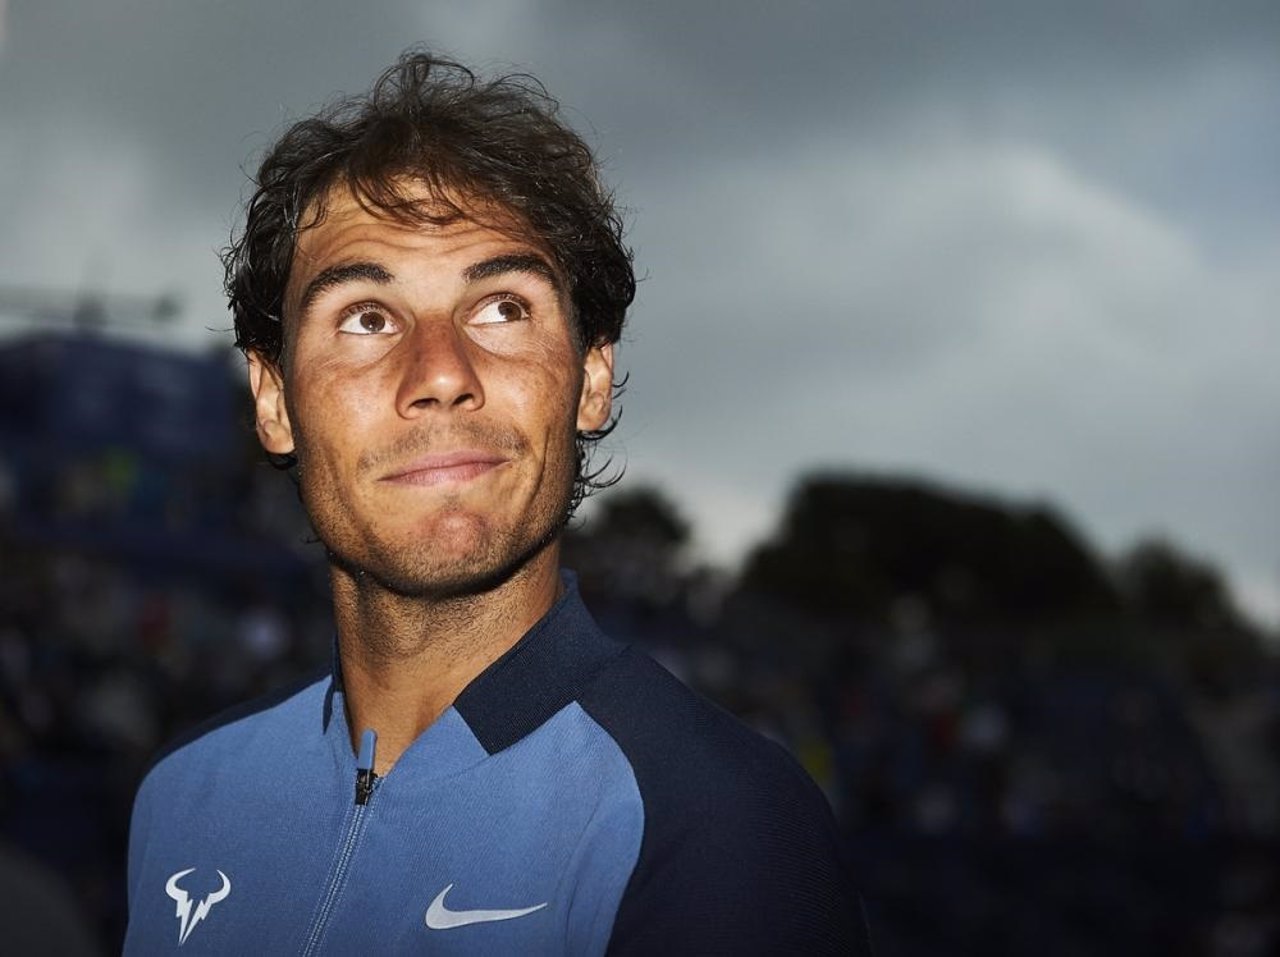 Nadal debutará ante Troicki o Kuznetsov y evitaría a Djokovic hasta la final